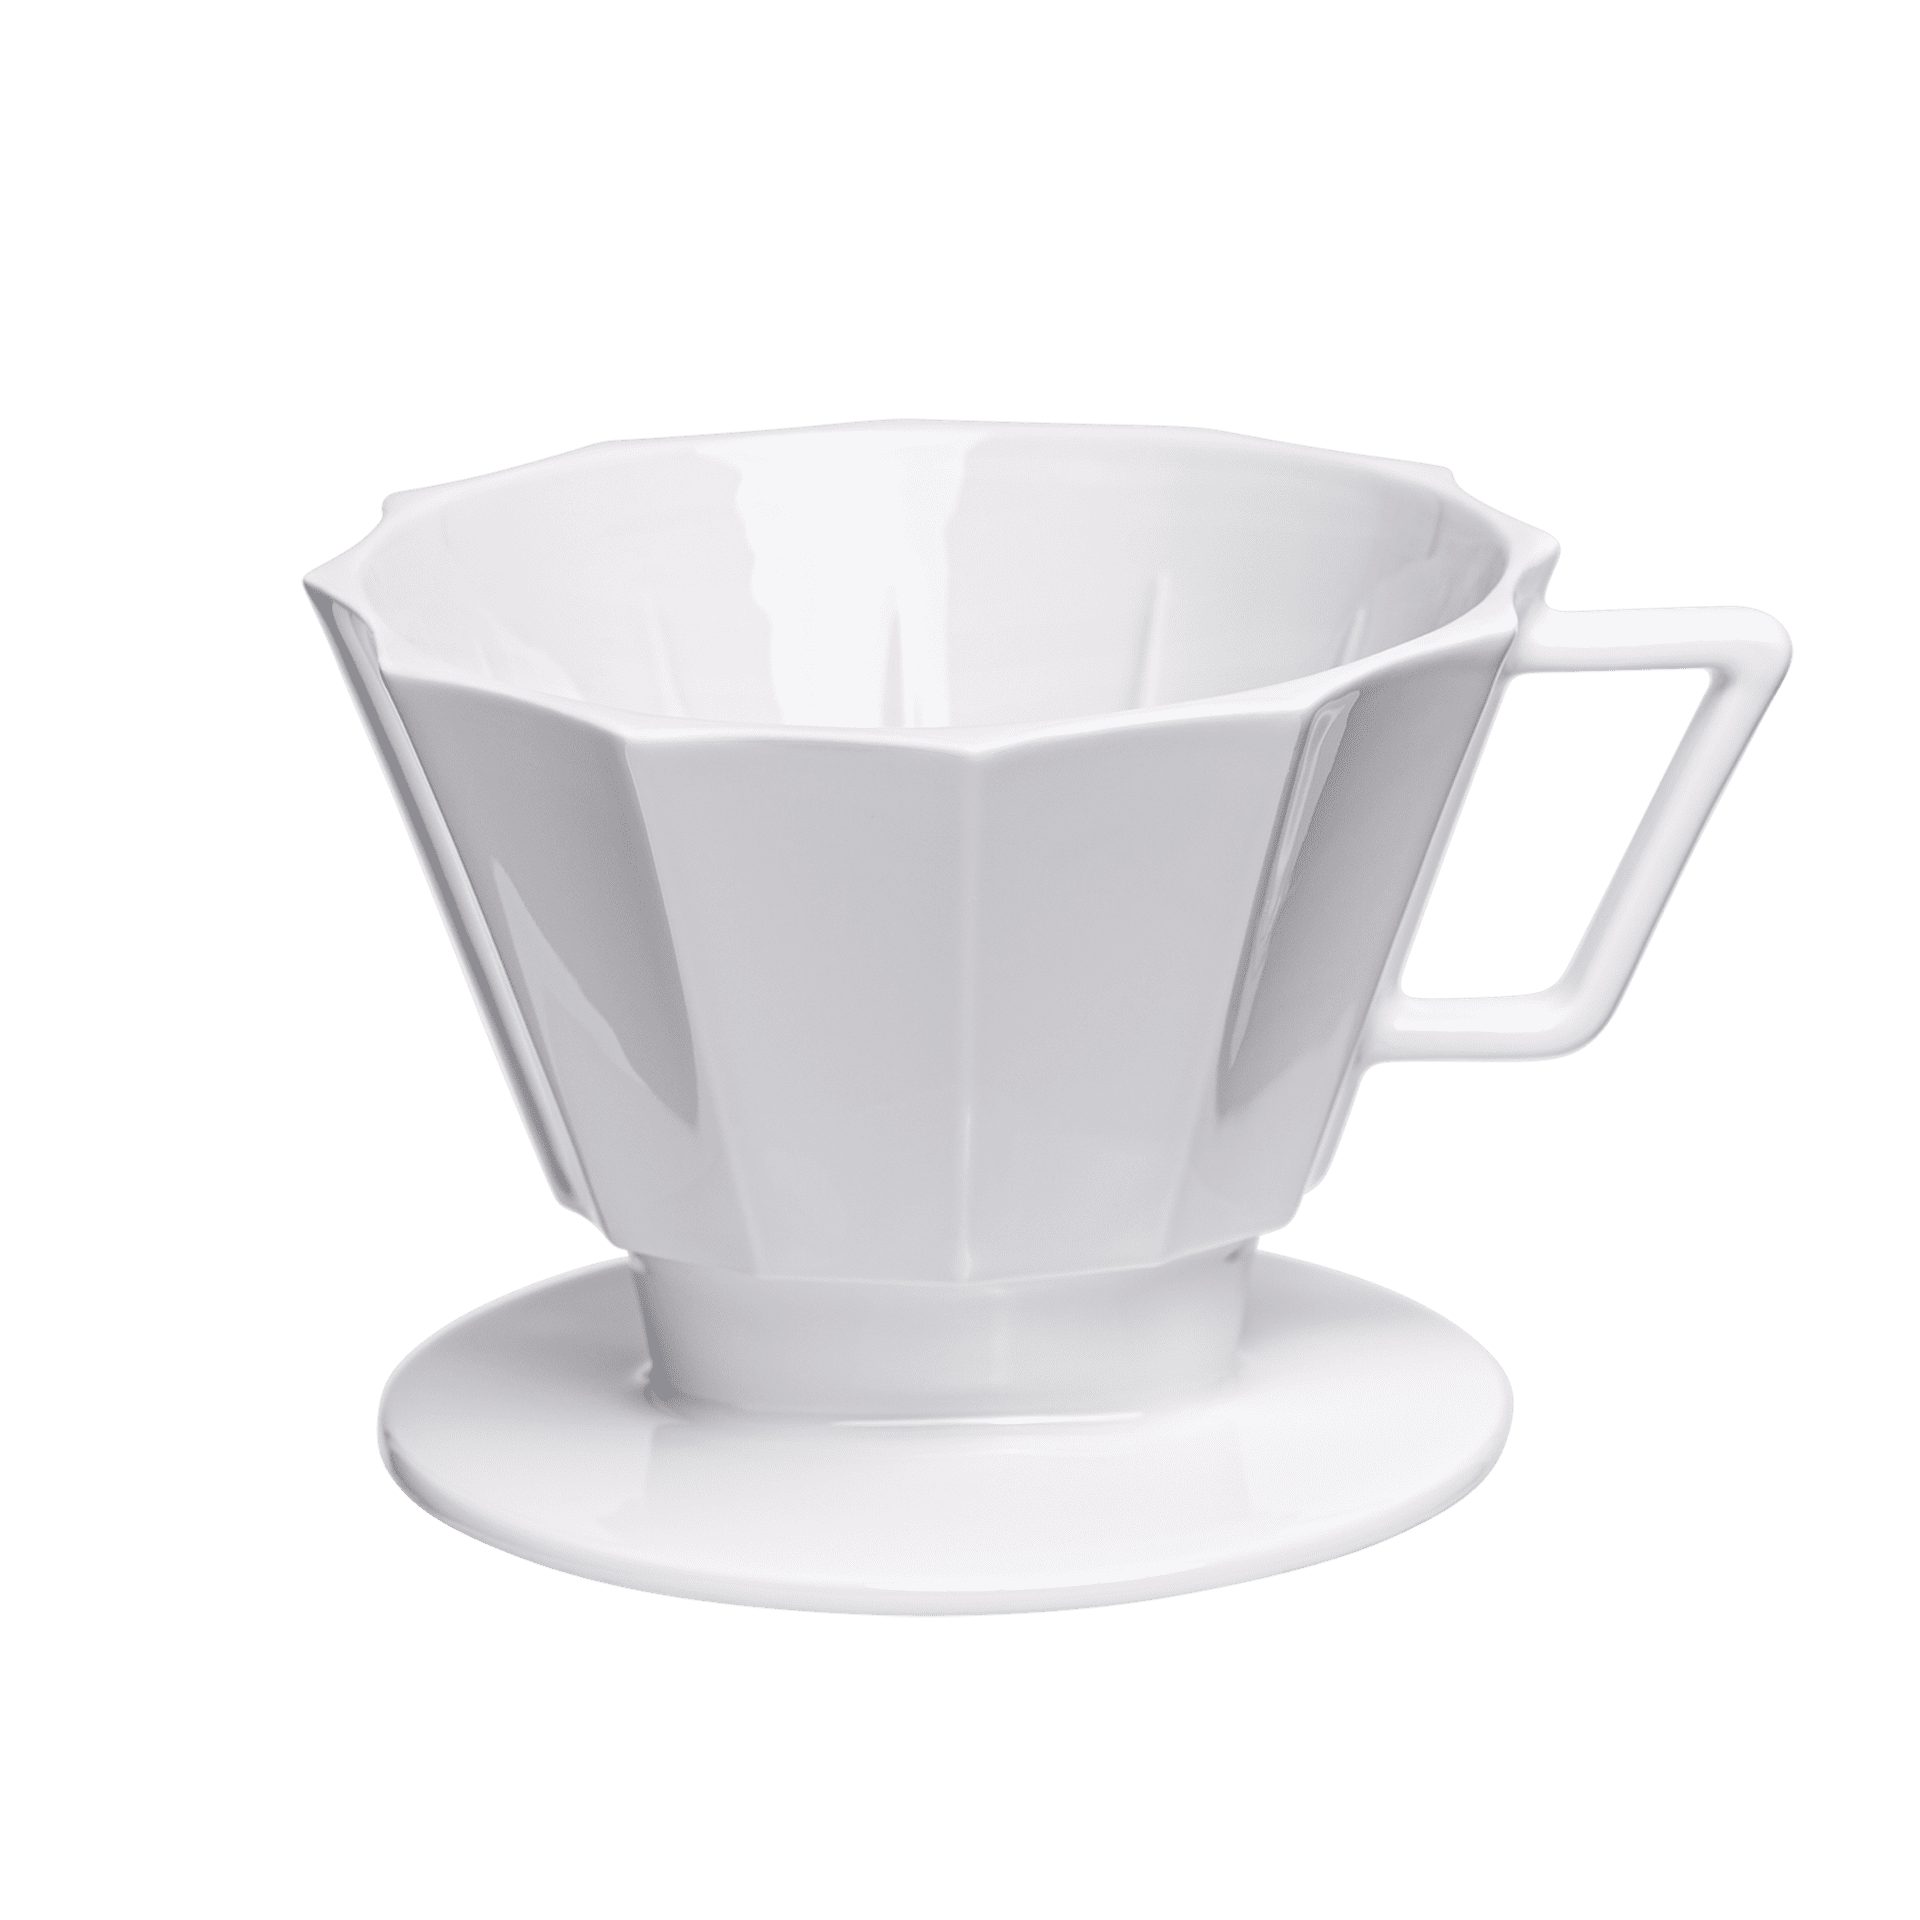 1 Porzellan, White Mahlwerck Kaffeefilter, Größe Pearl 4 Manufaktur x Handfilter